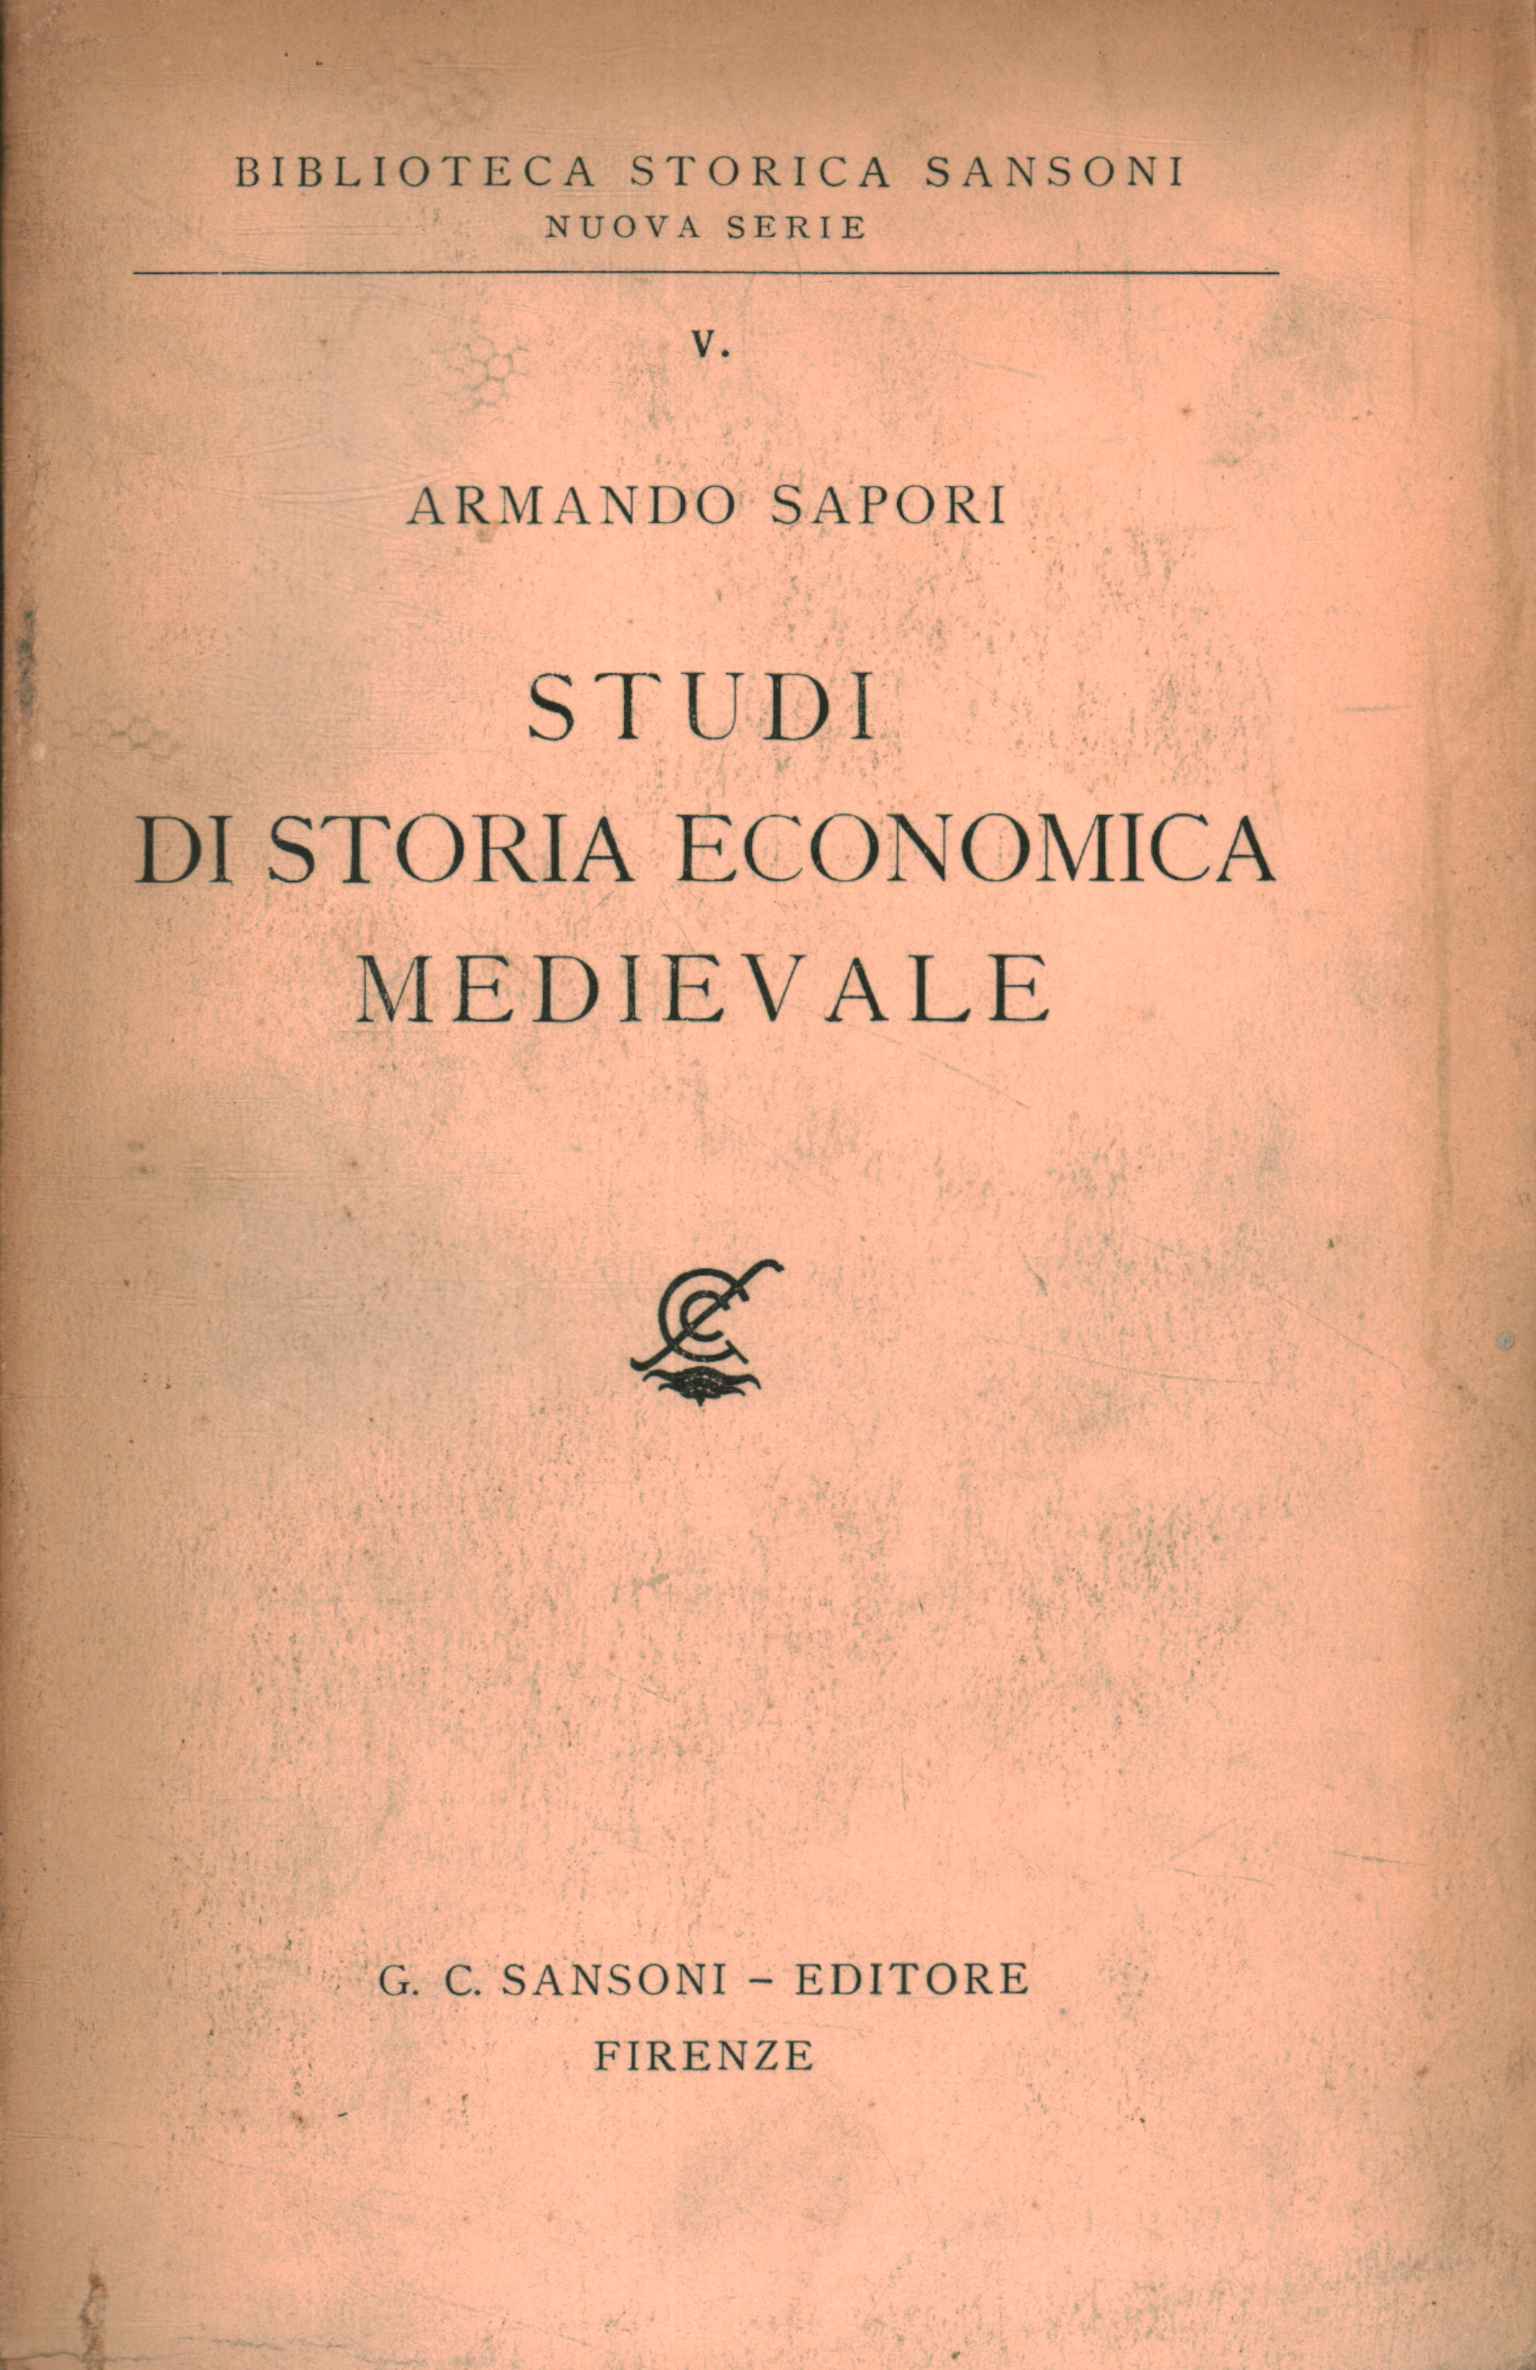 Studies in medieval economic history